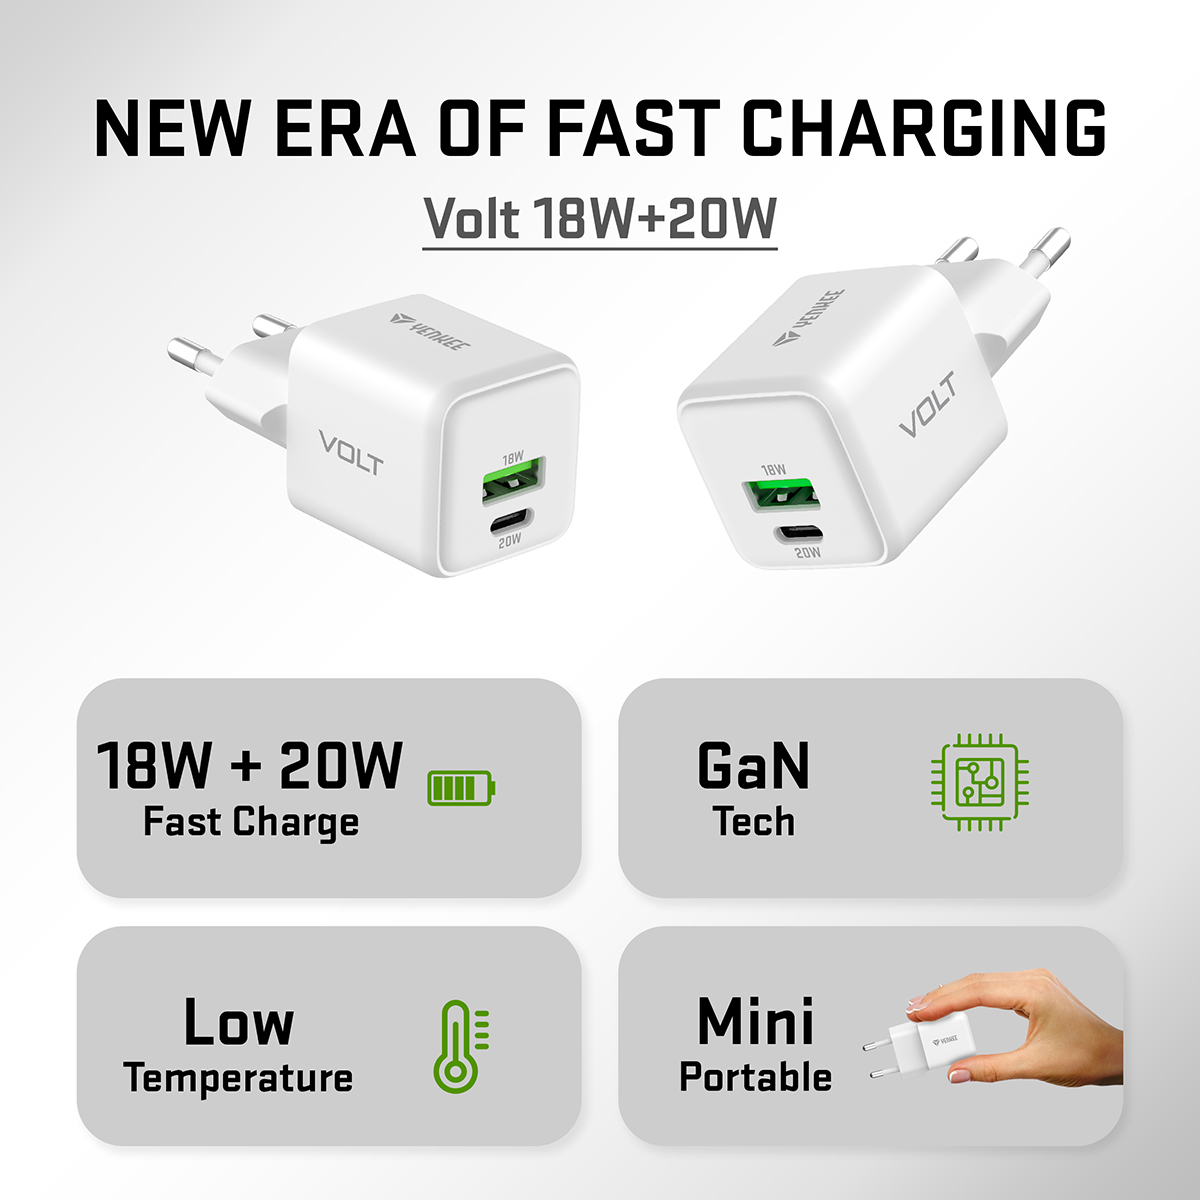 New era of fast charging